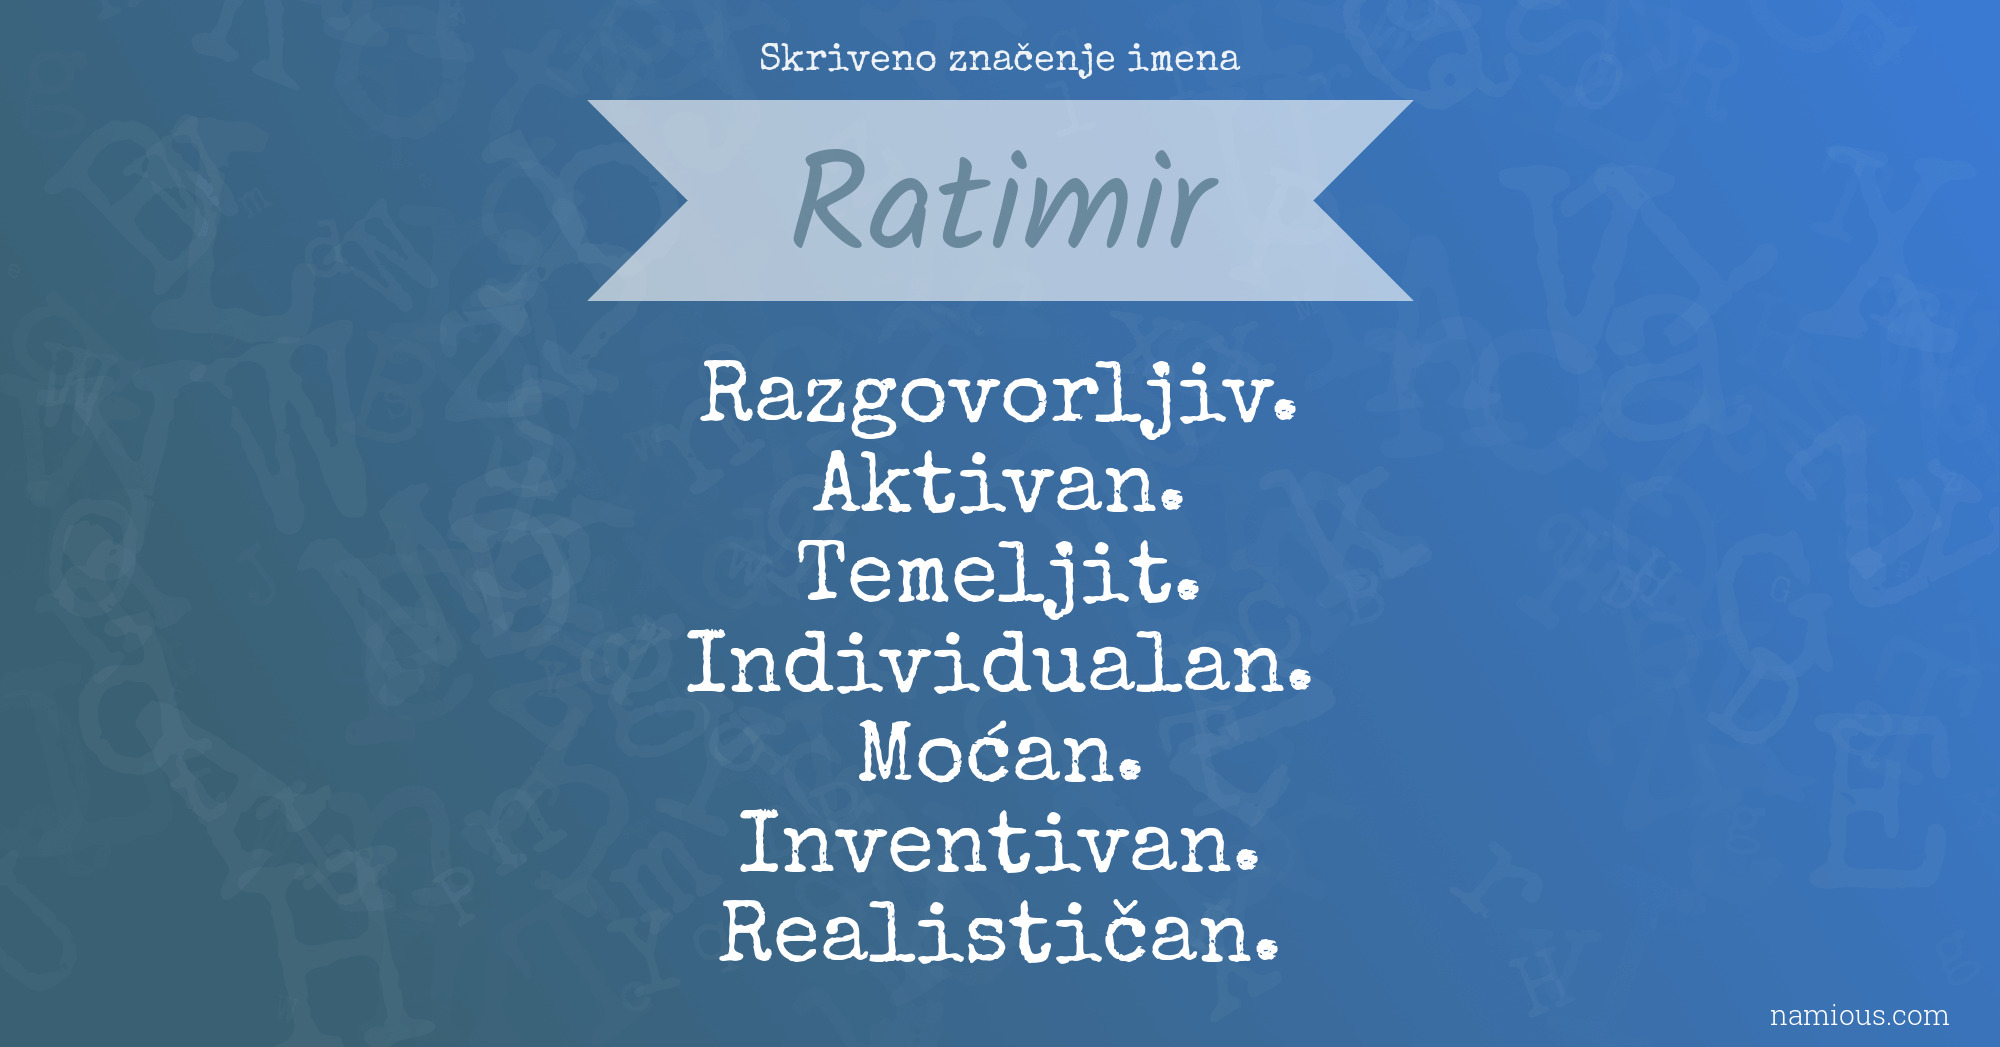 Skriveno značenje imena Ratimir